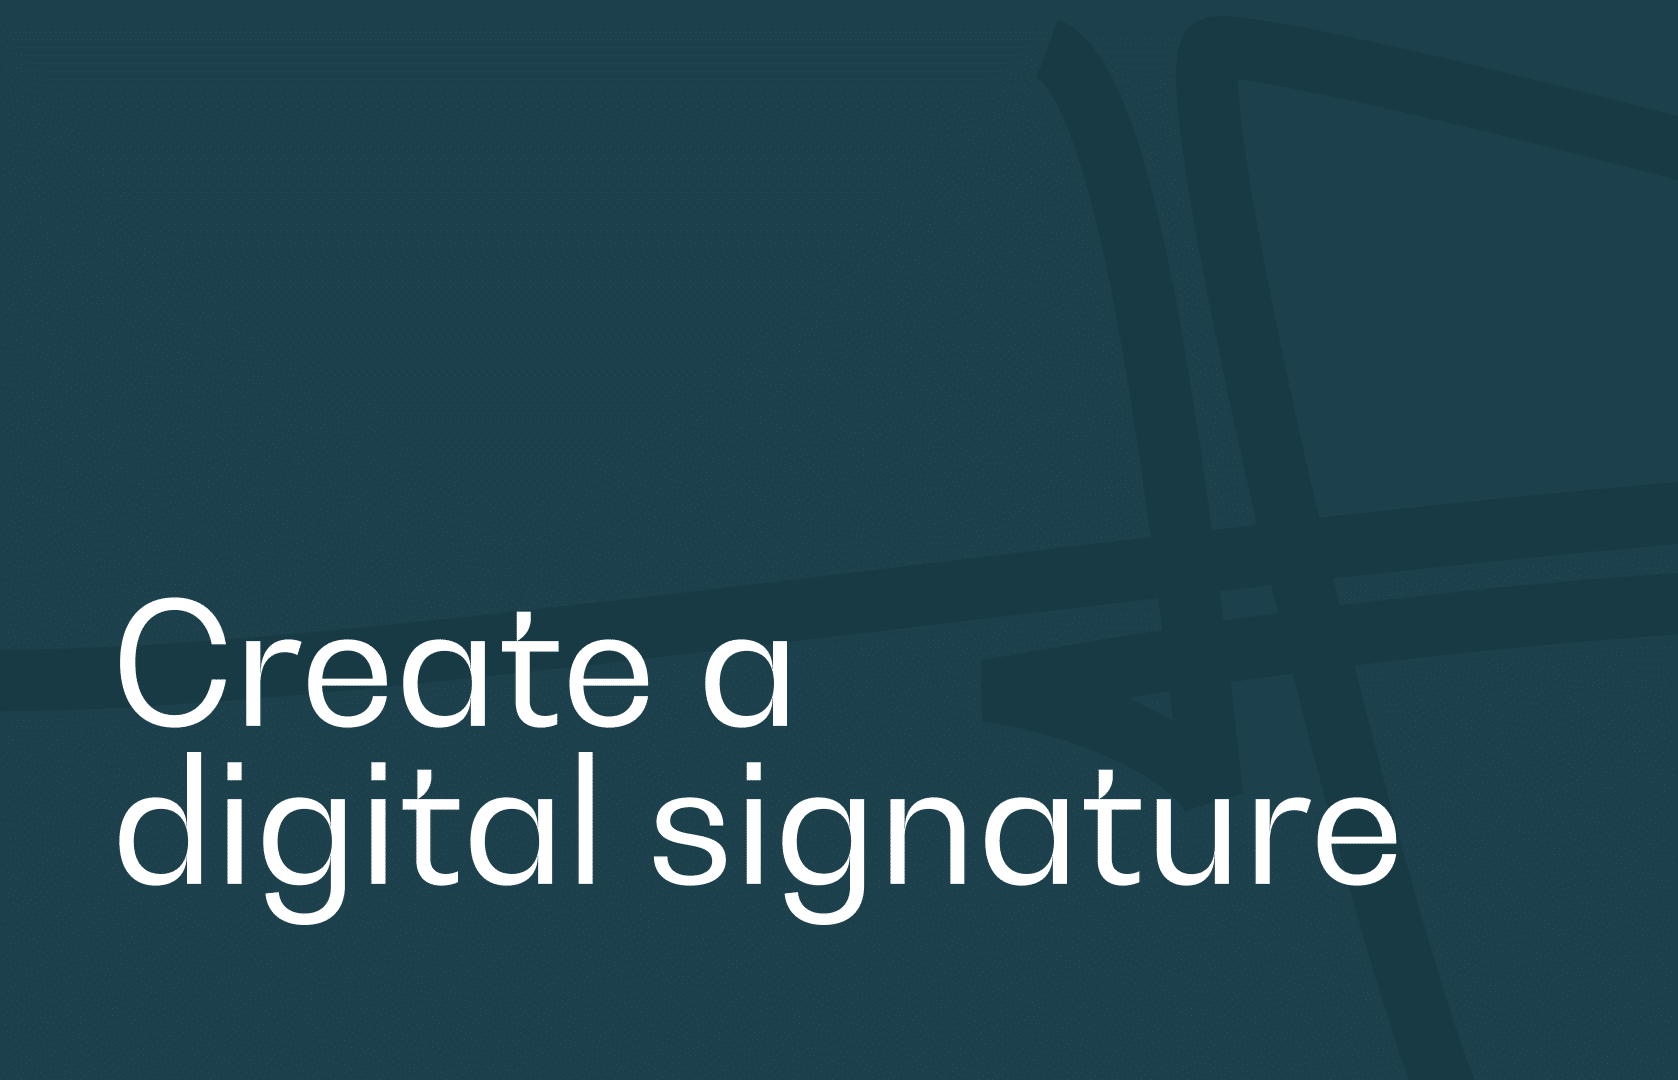 Create a digital signature